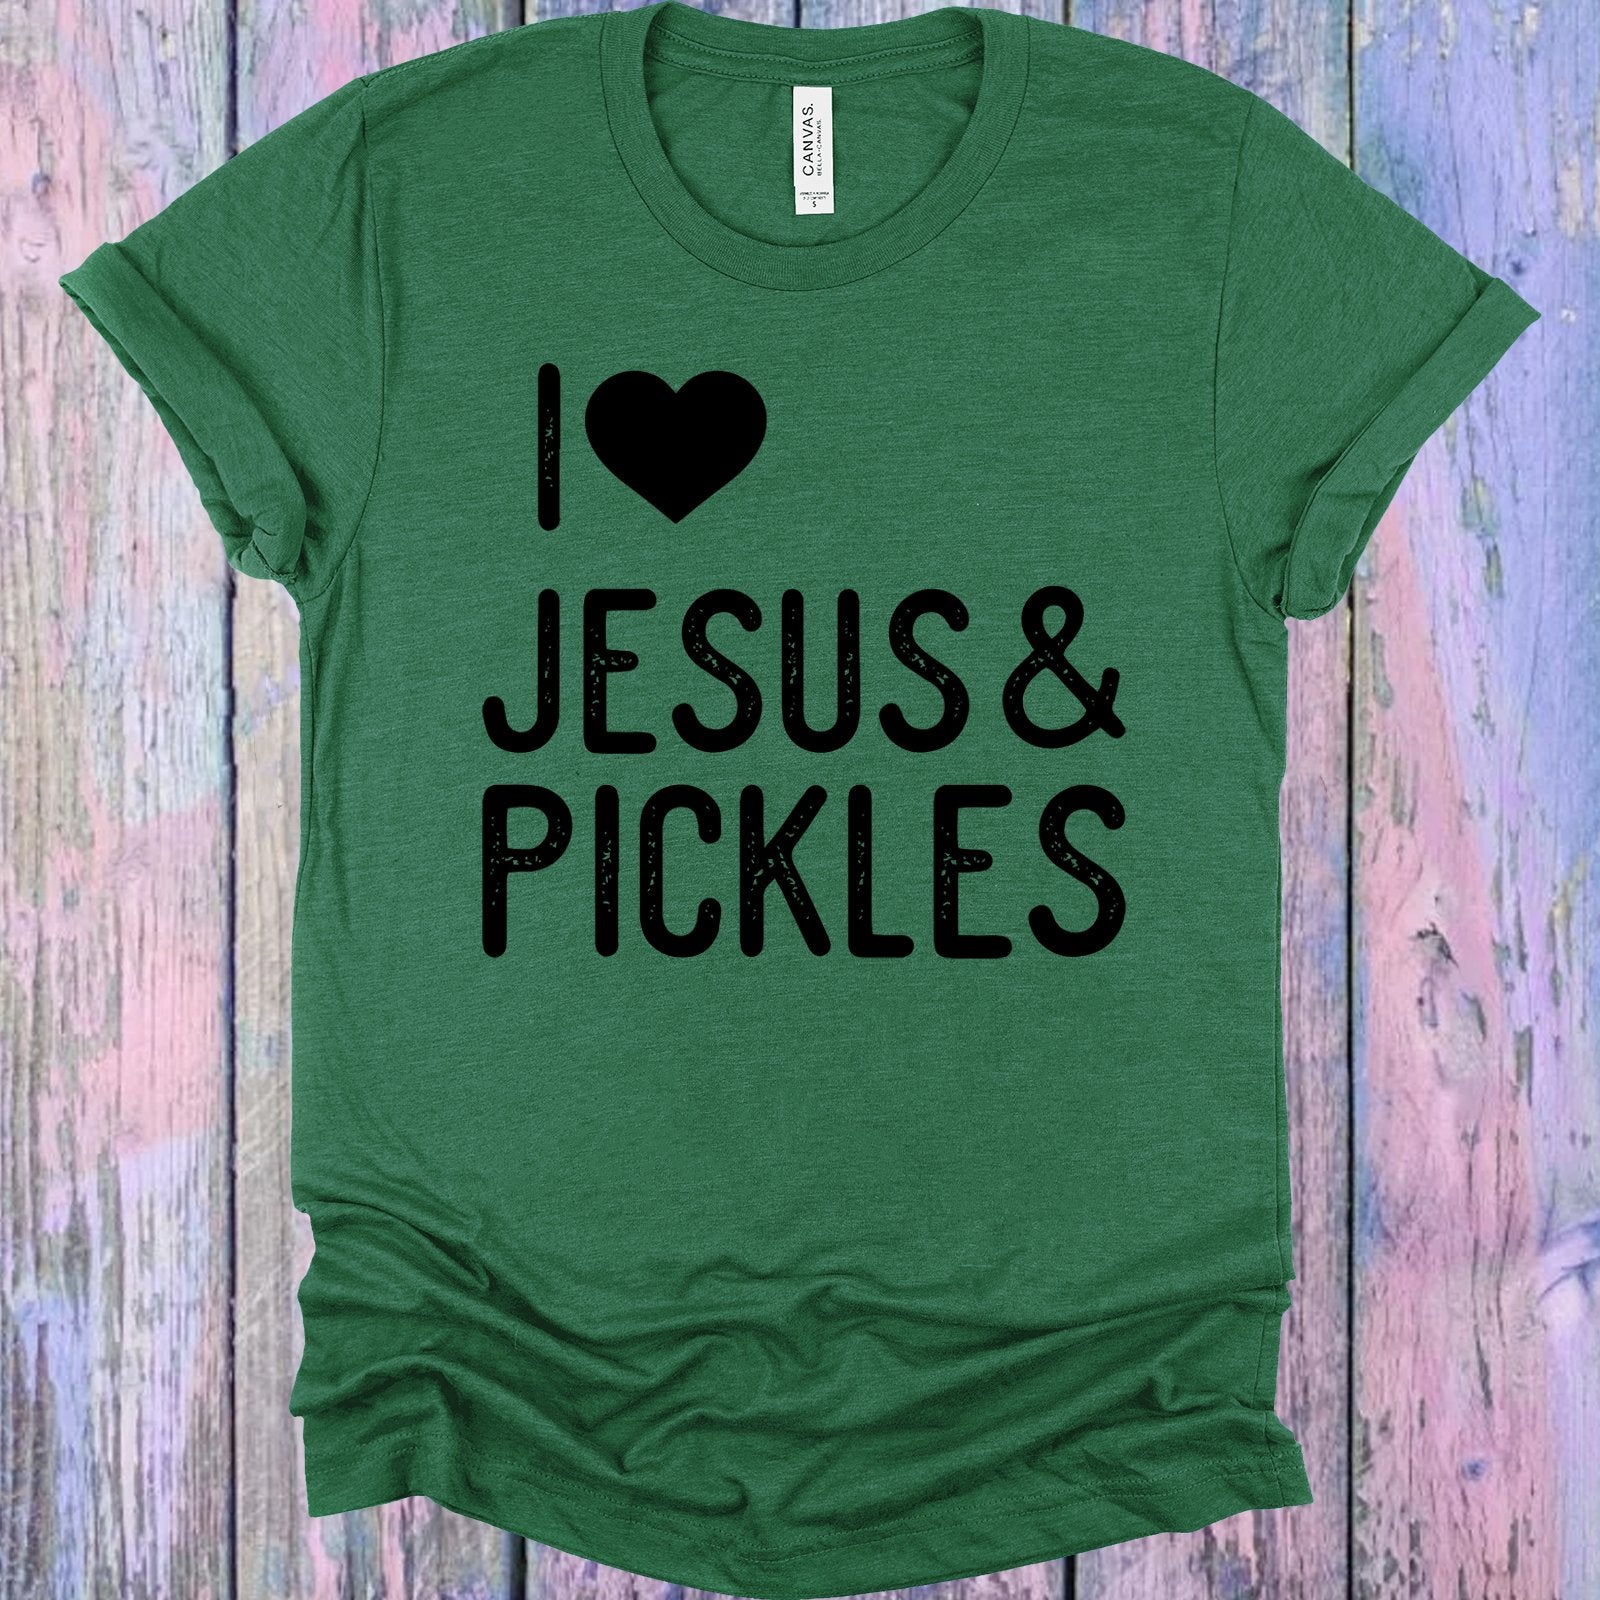 I Love Jesus & Pickles Graphic Tee Graphic Tee